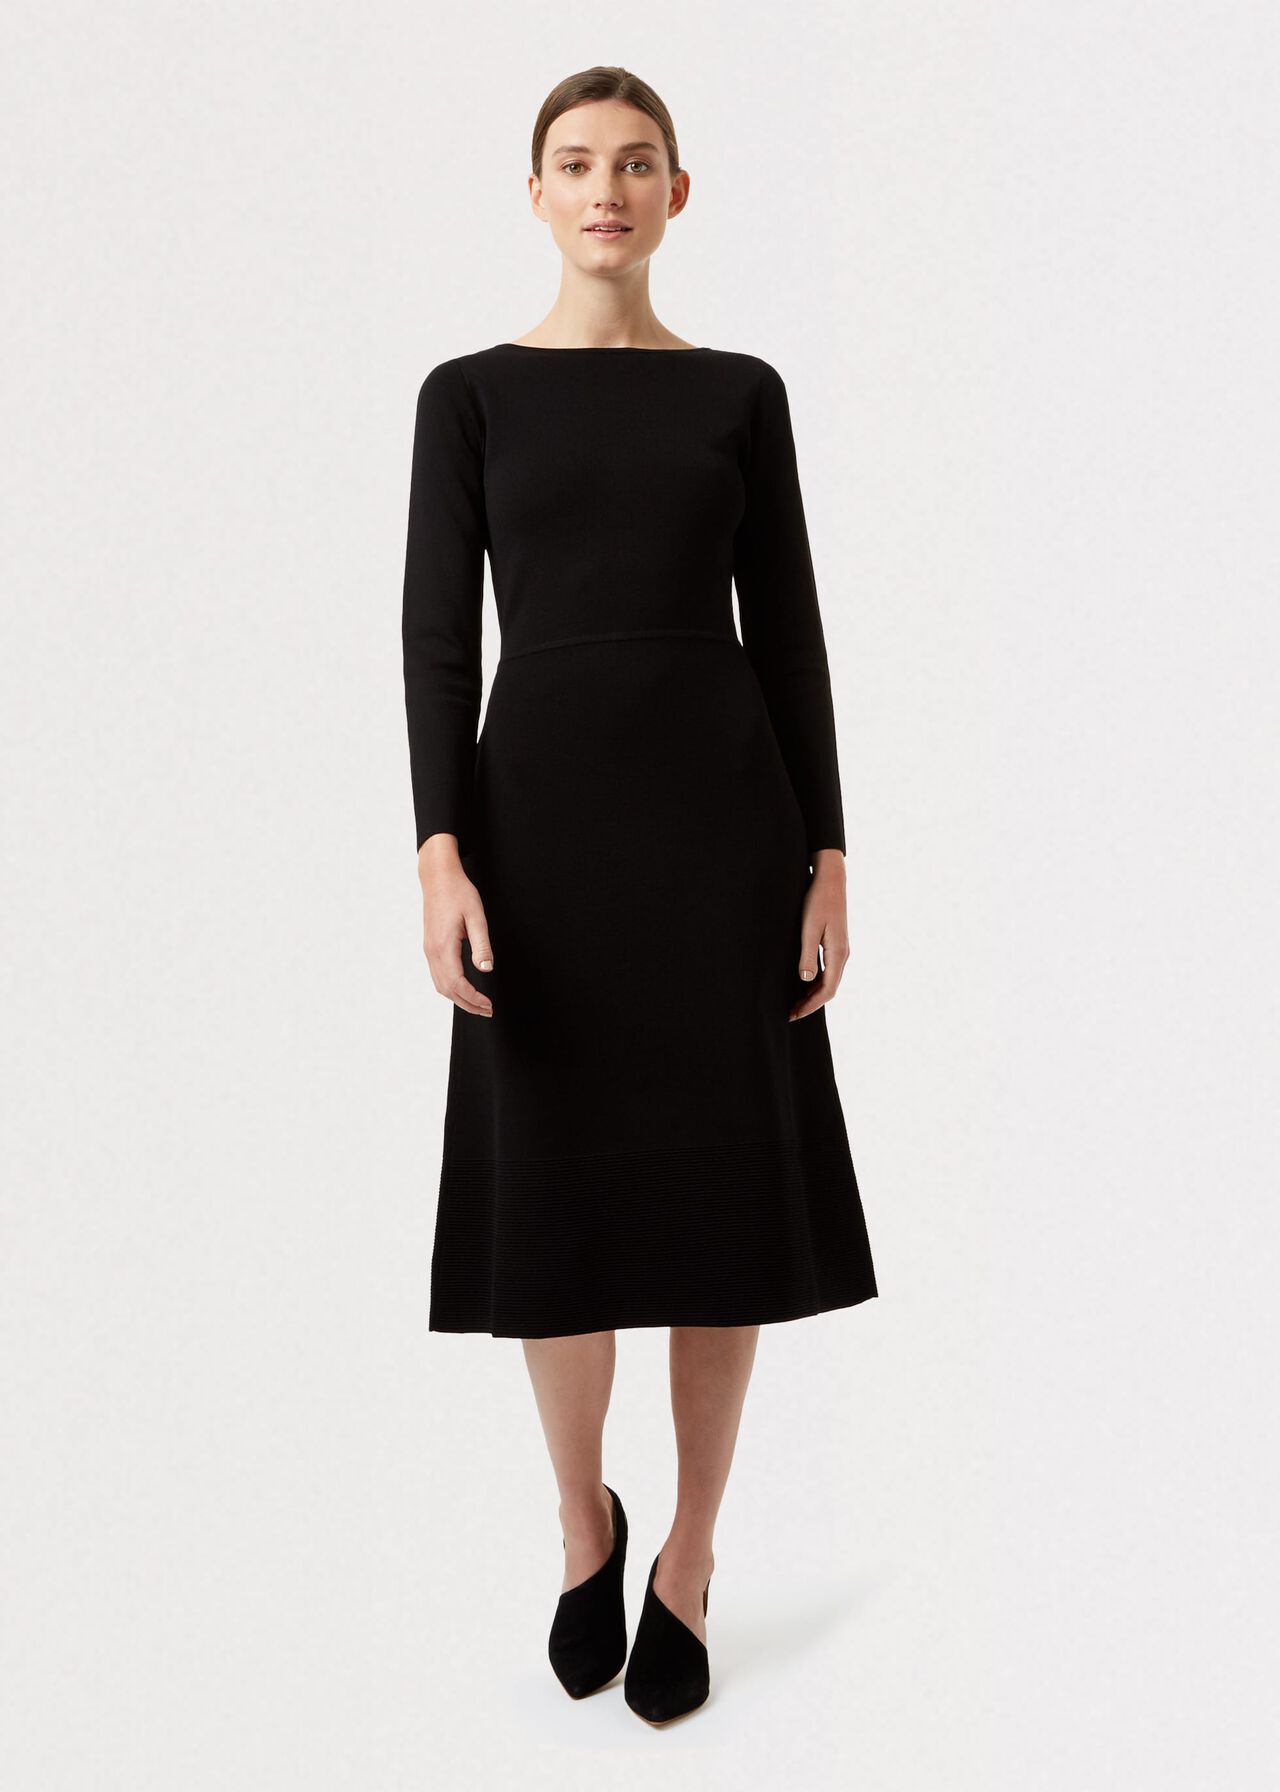 Rebecca Knitted Dress, Black, hi-res